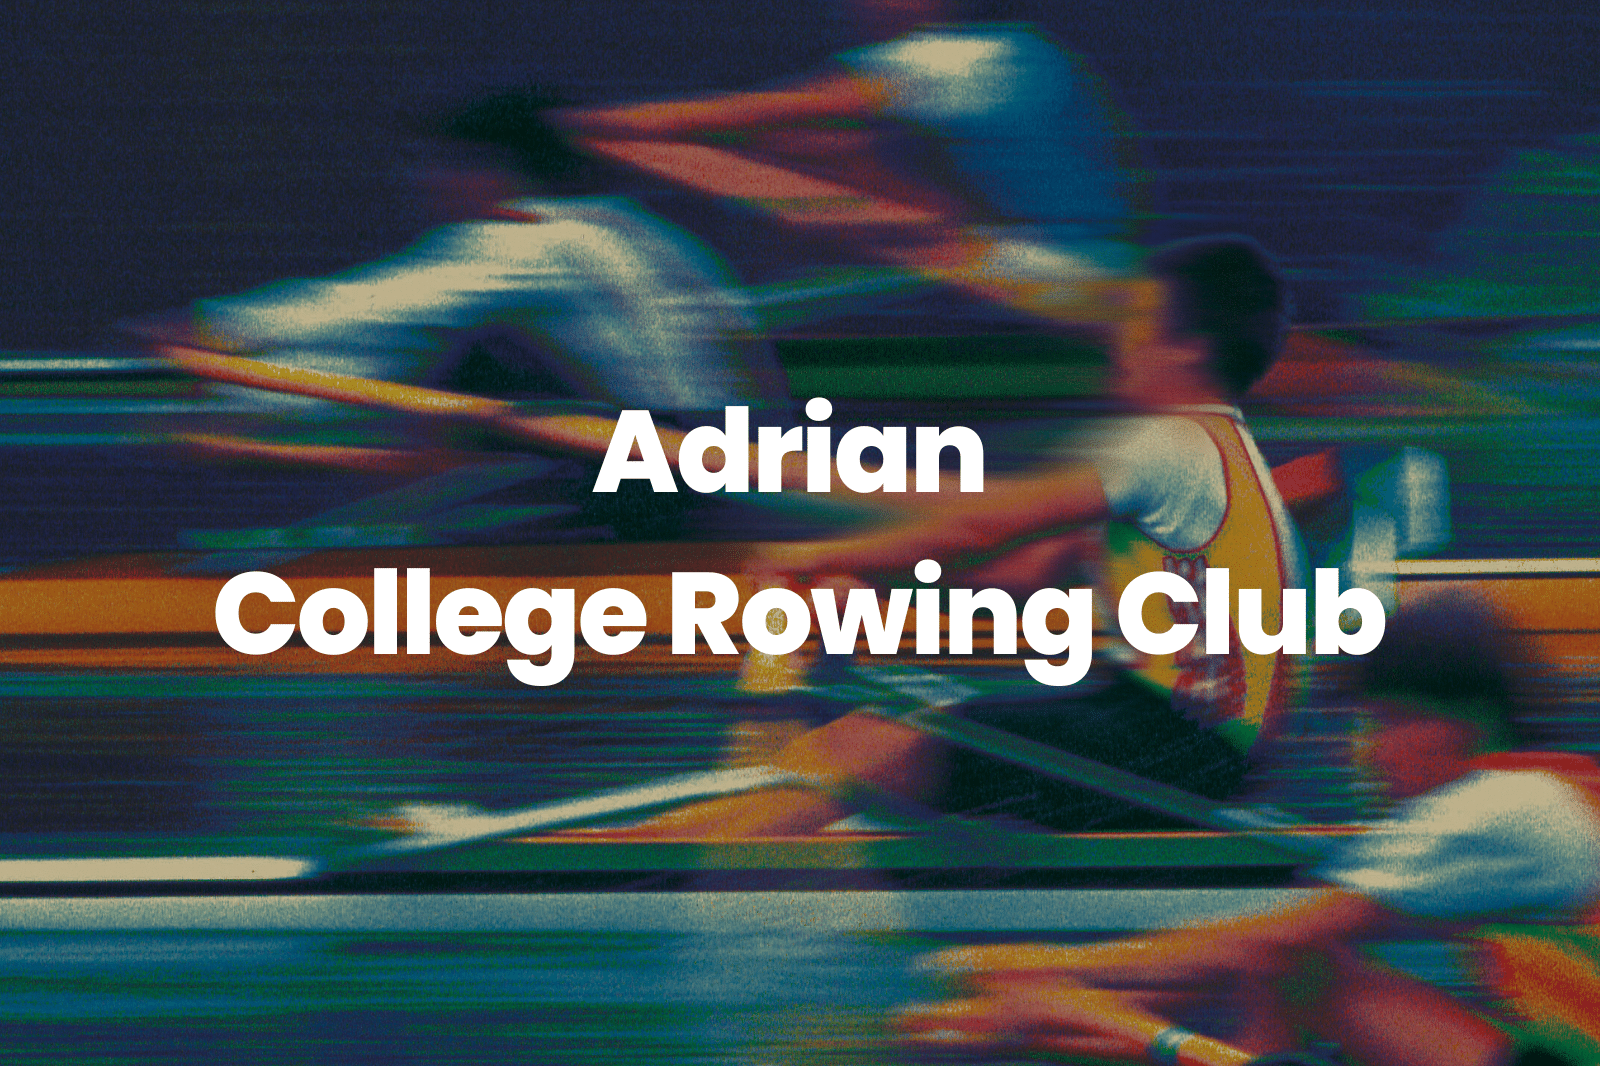 Adrian College Rowing Club